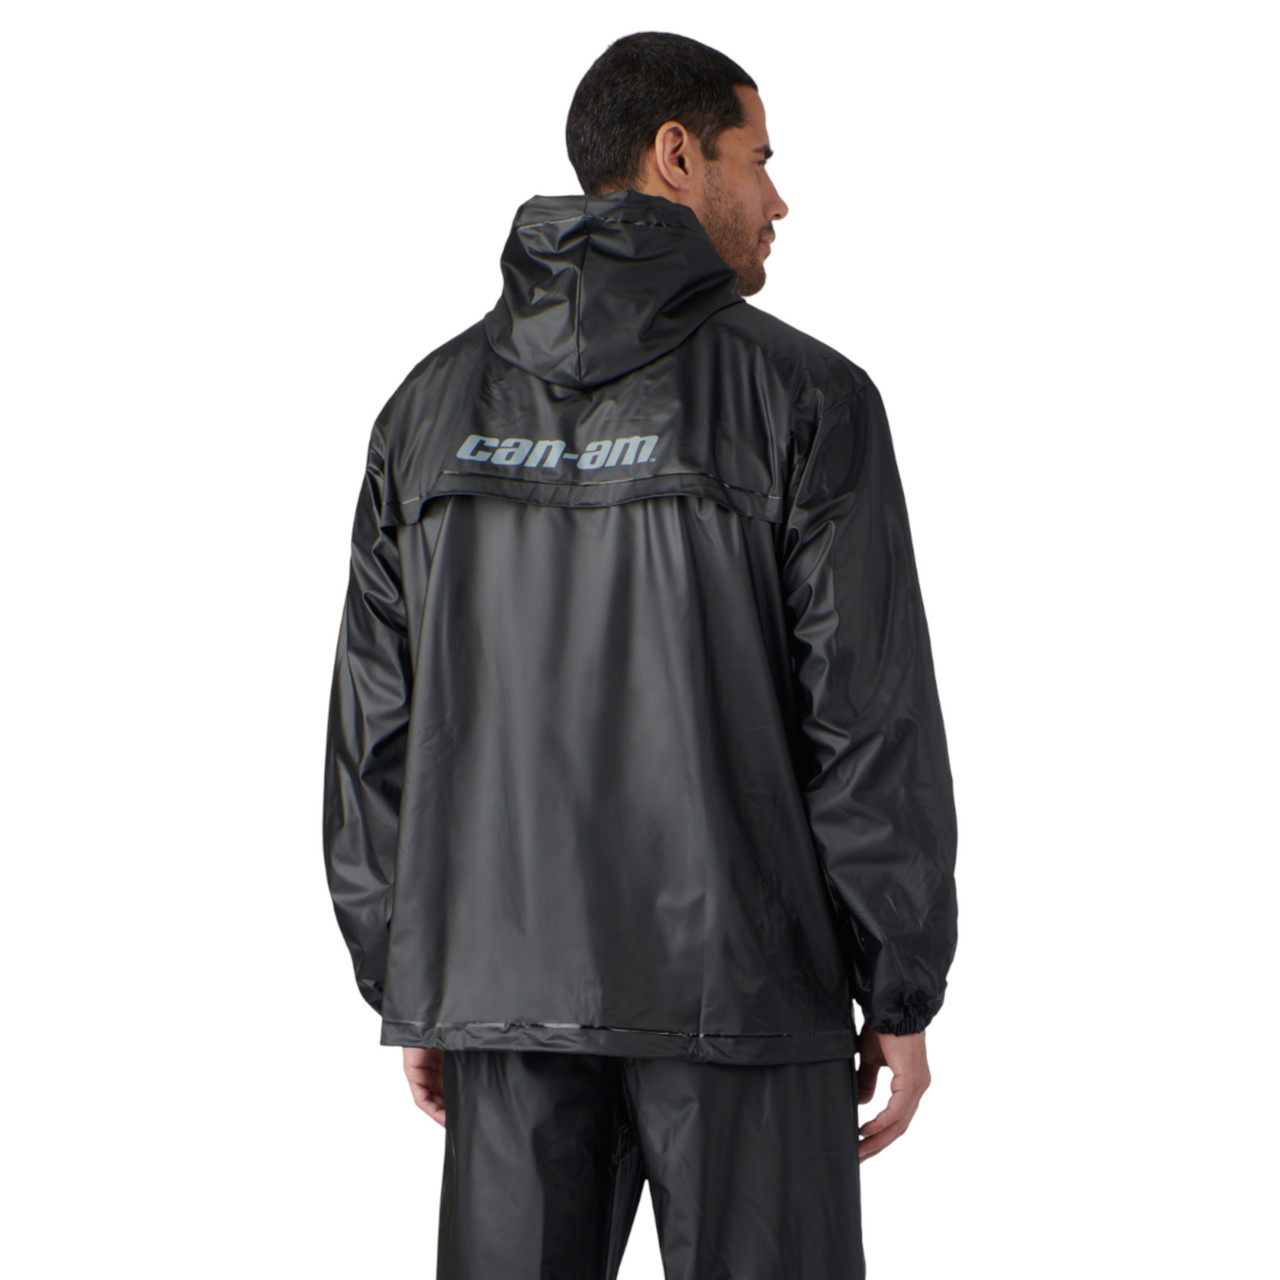 Can-Am New OEM Men's 2X-Large Matte Black Mud Jacket, 2866761493